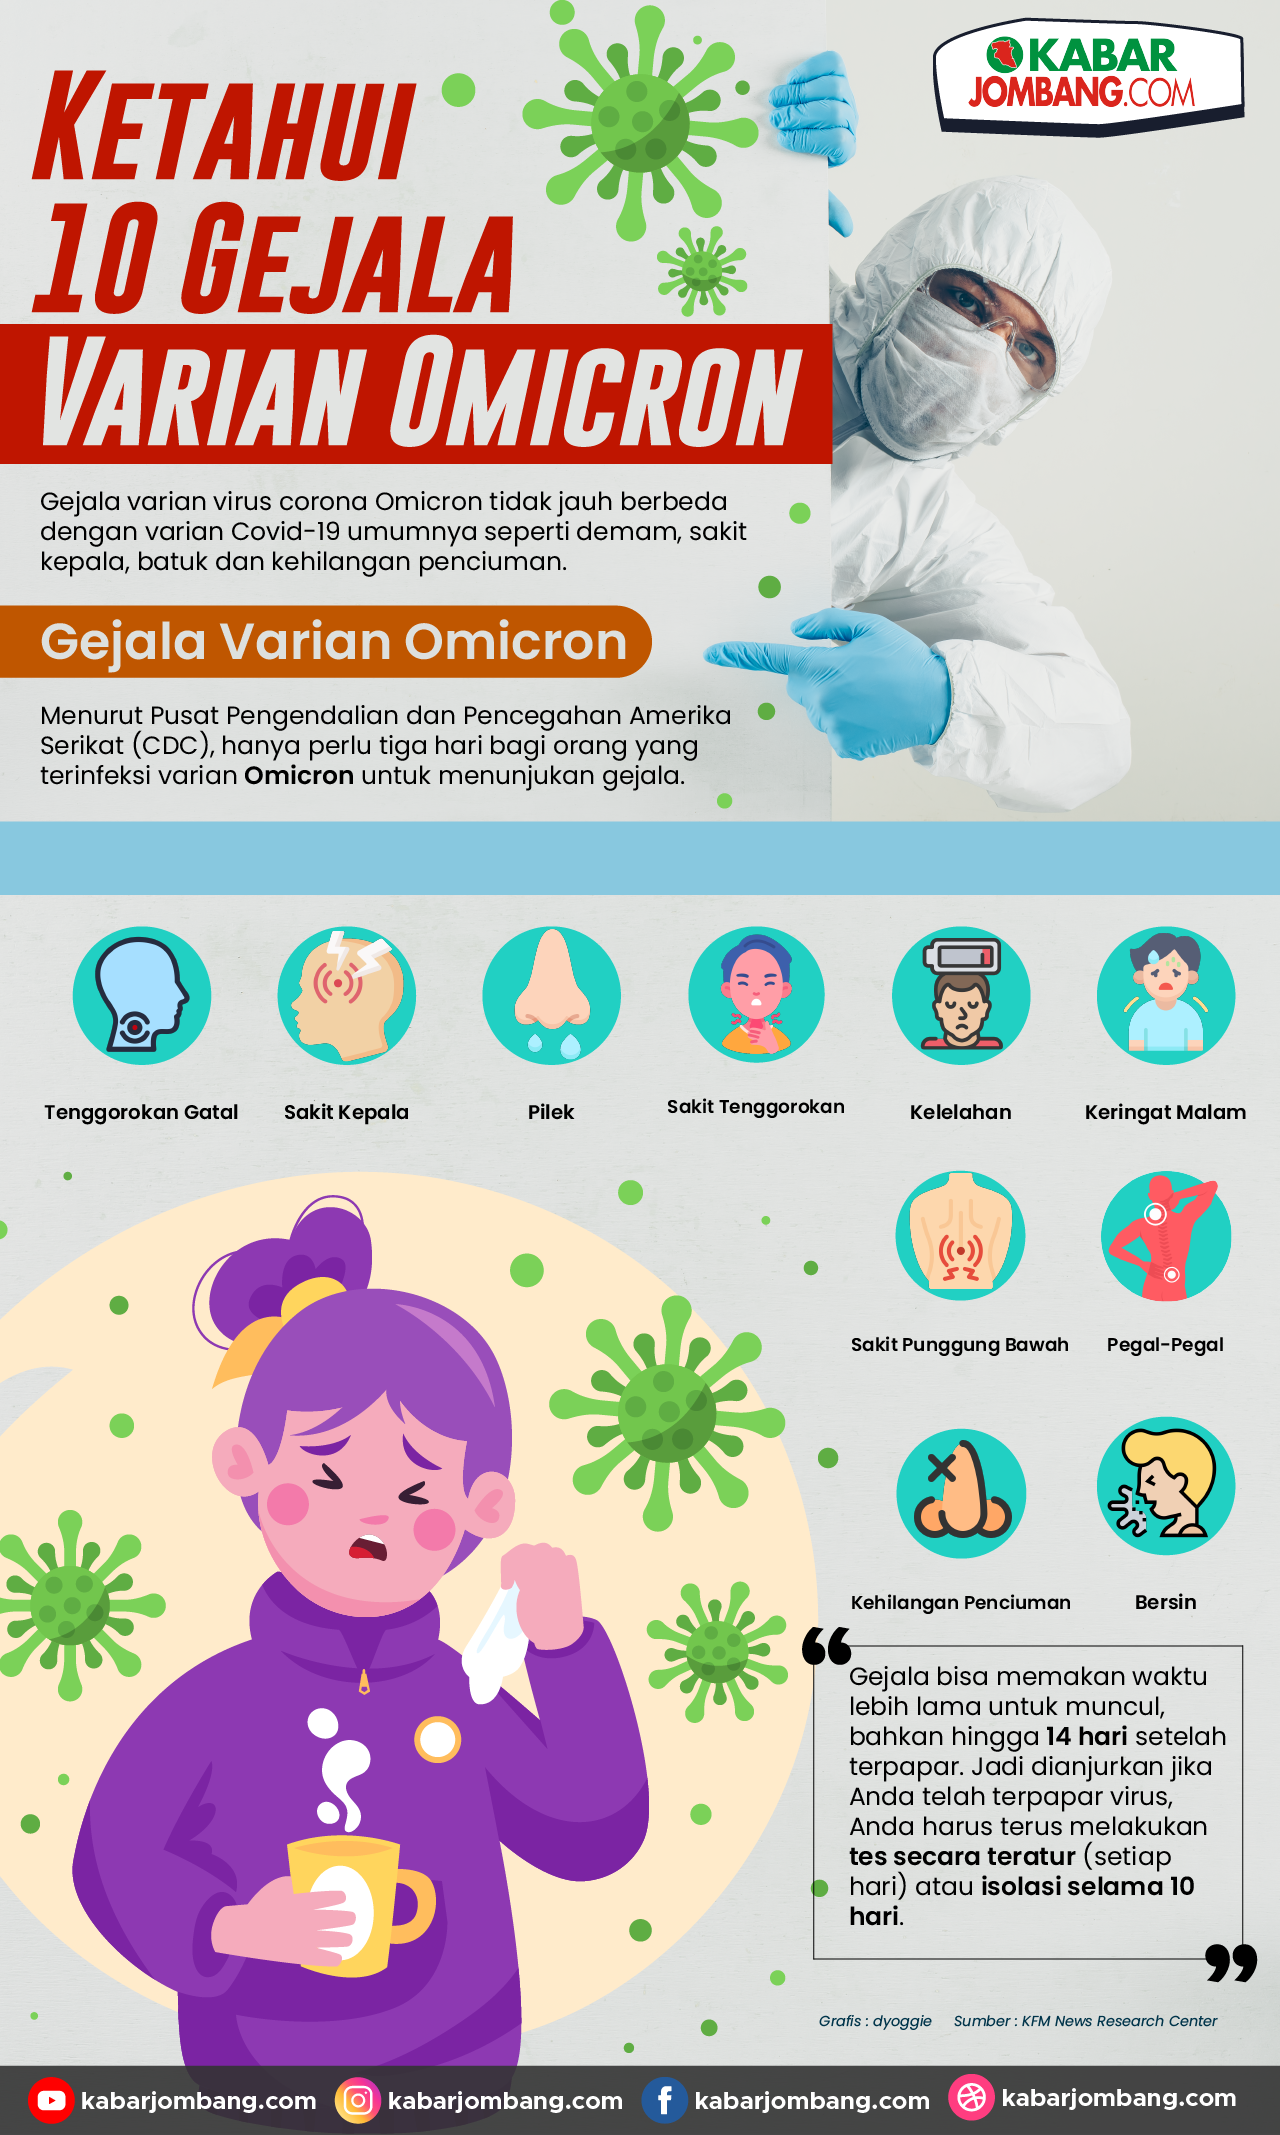 Virus omicron gejala